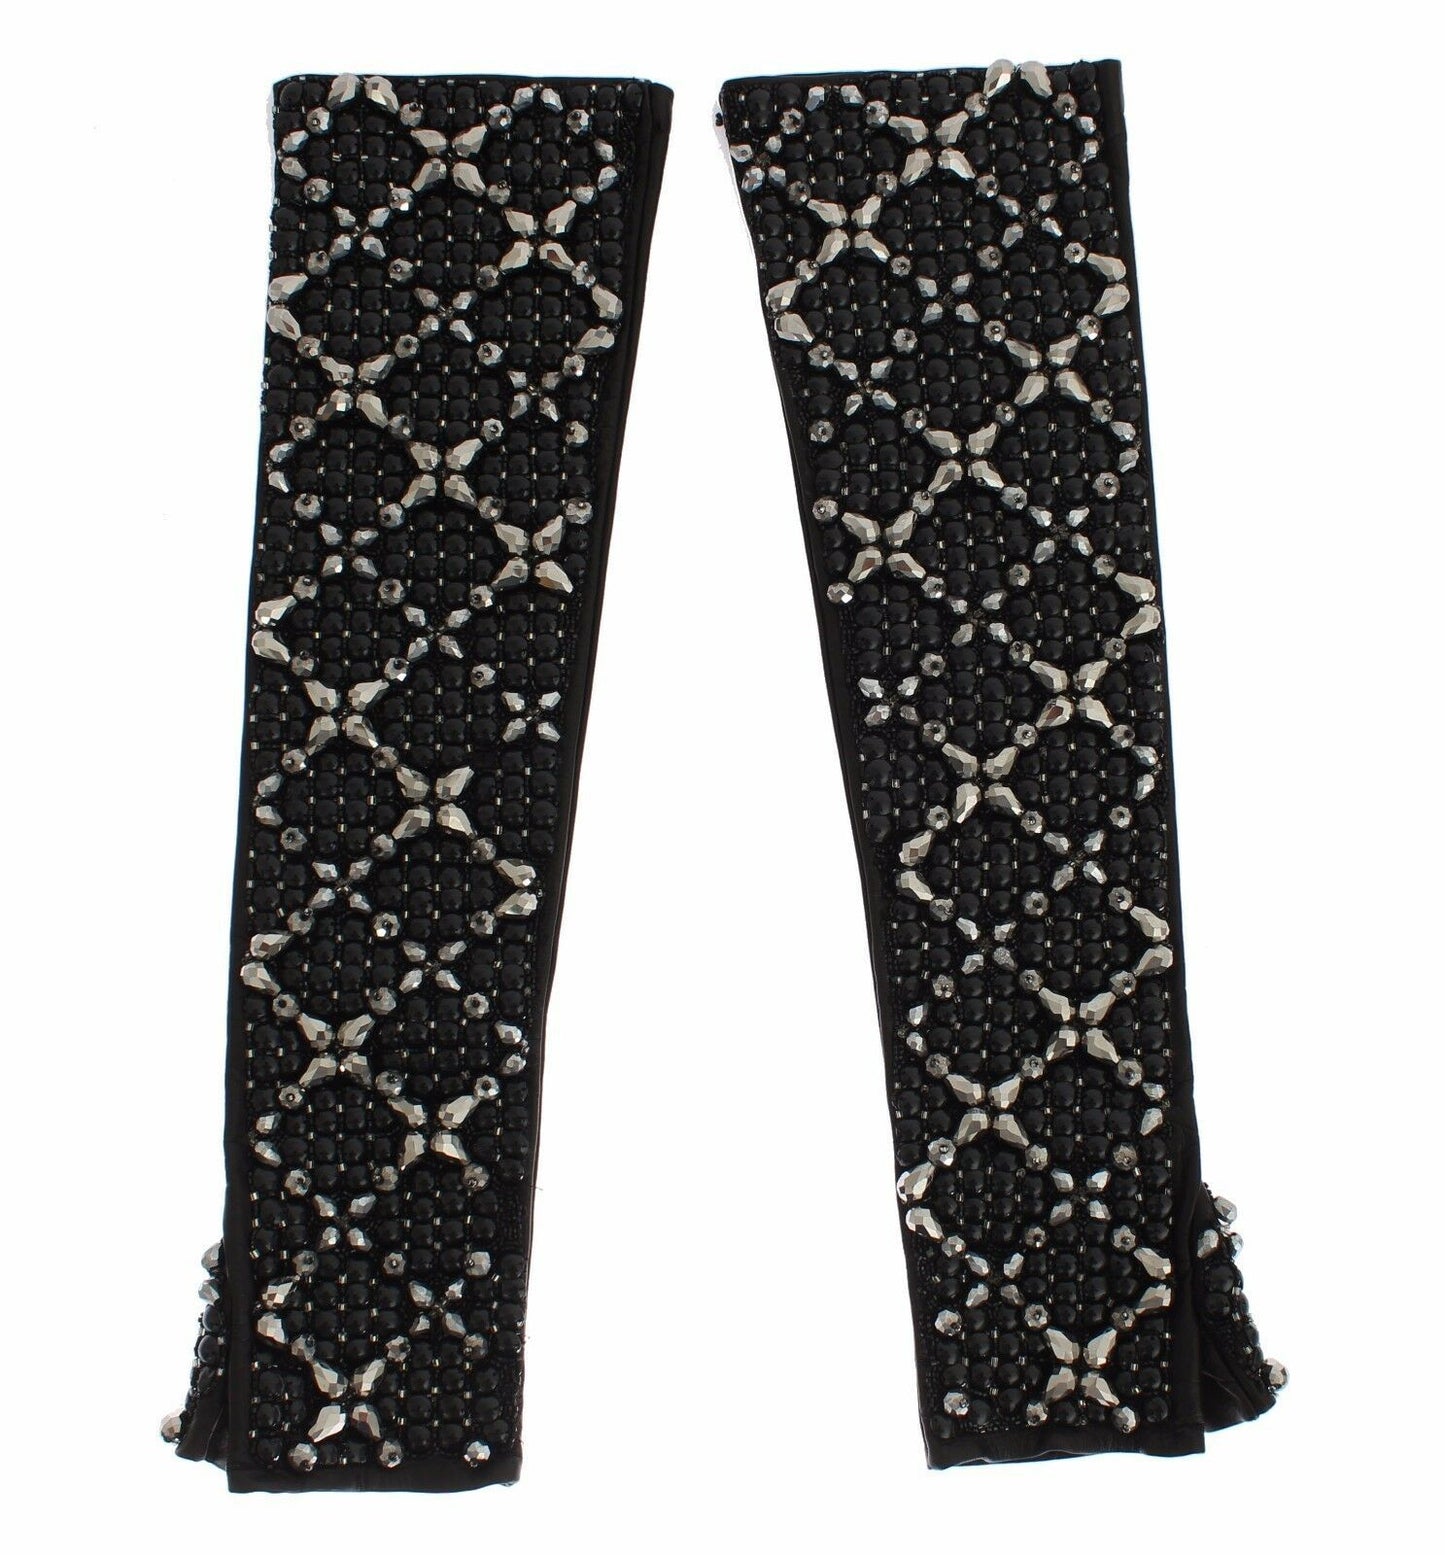 Dolce & Gabbana Elegant Crystal Beaded Leather Gloves